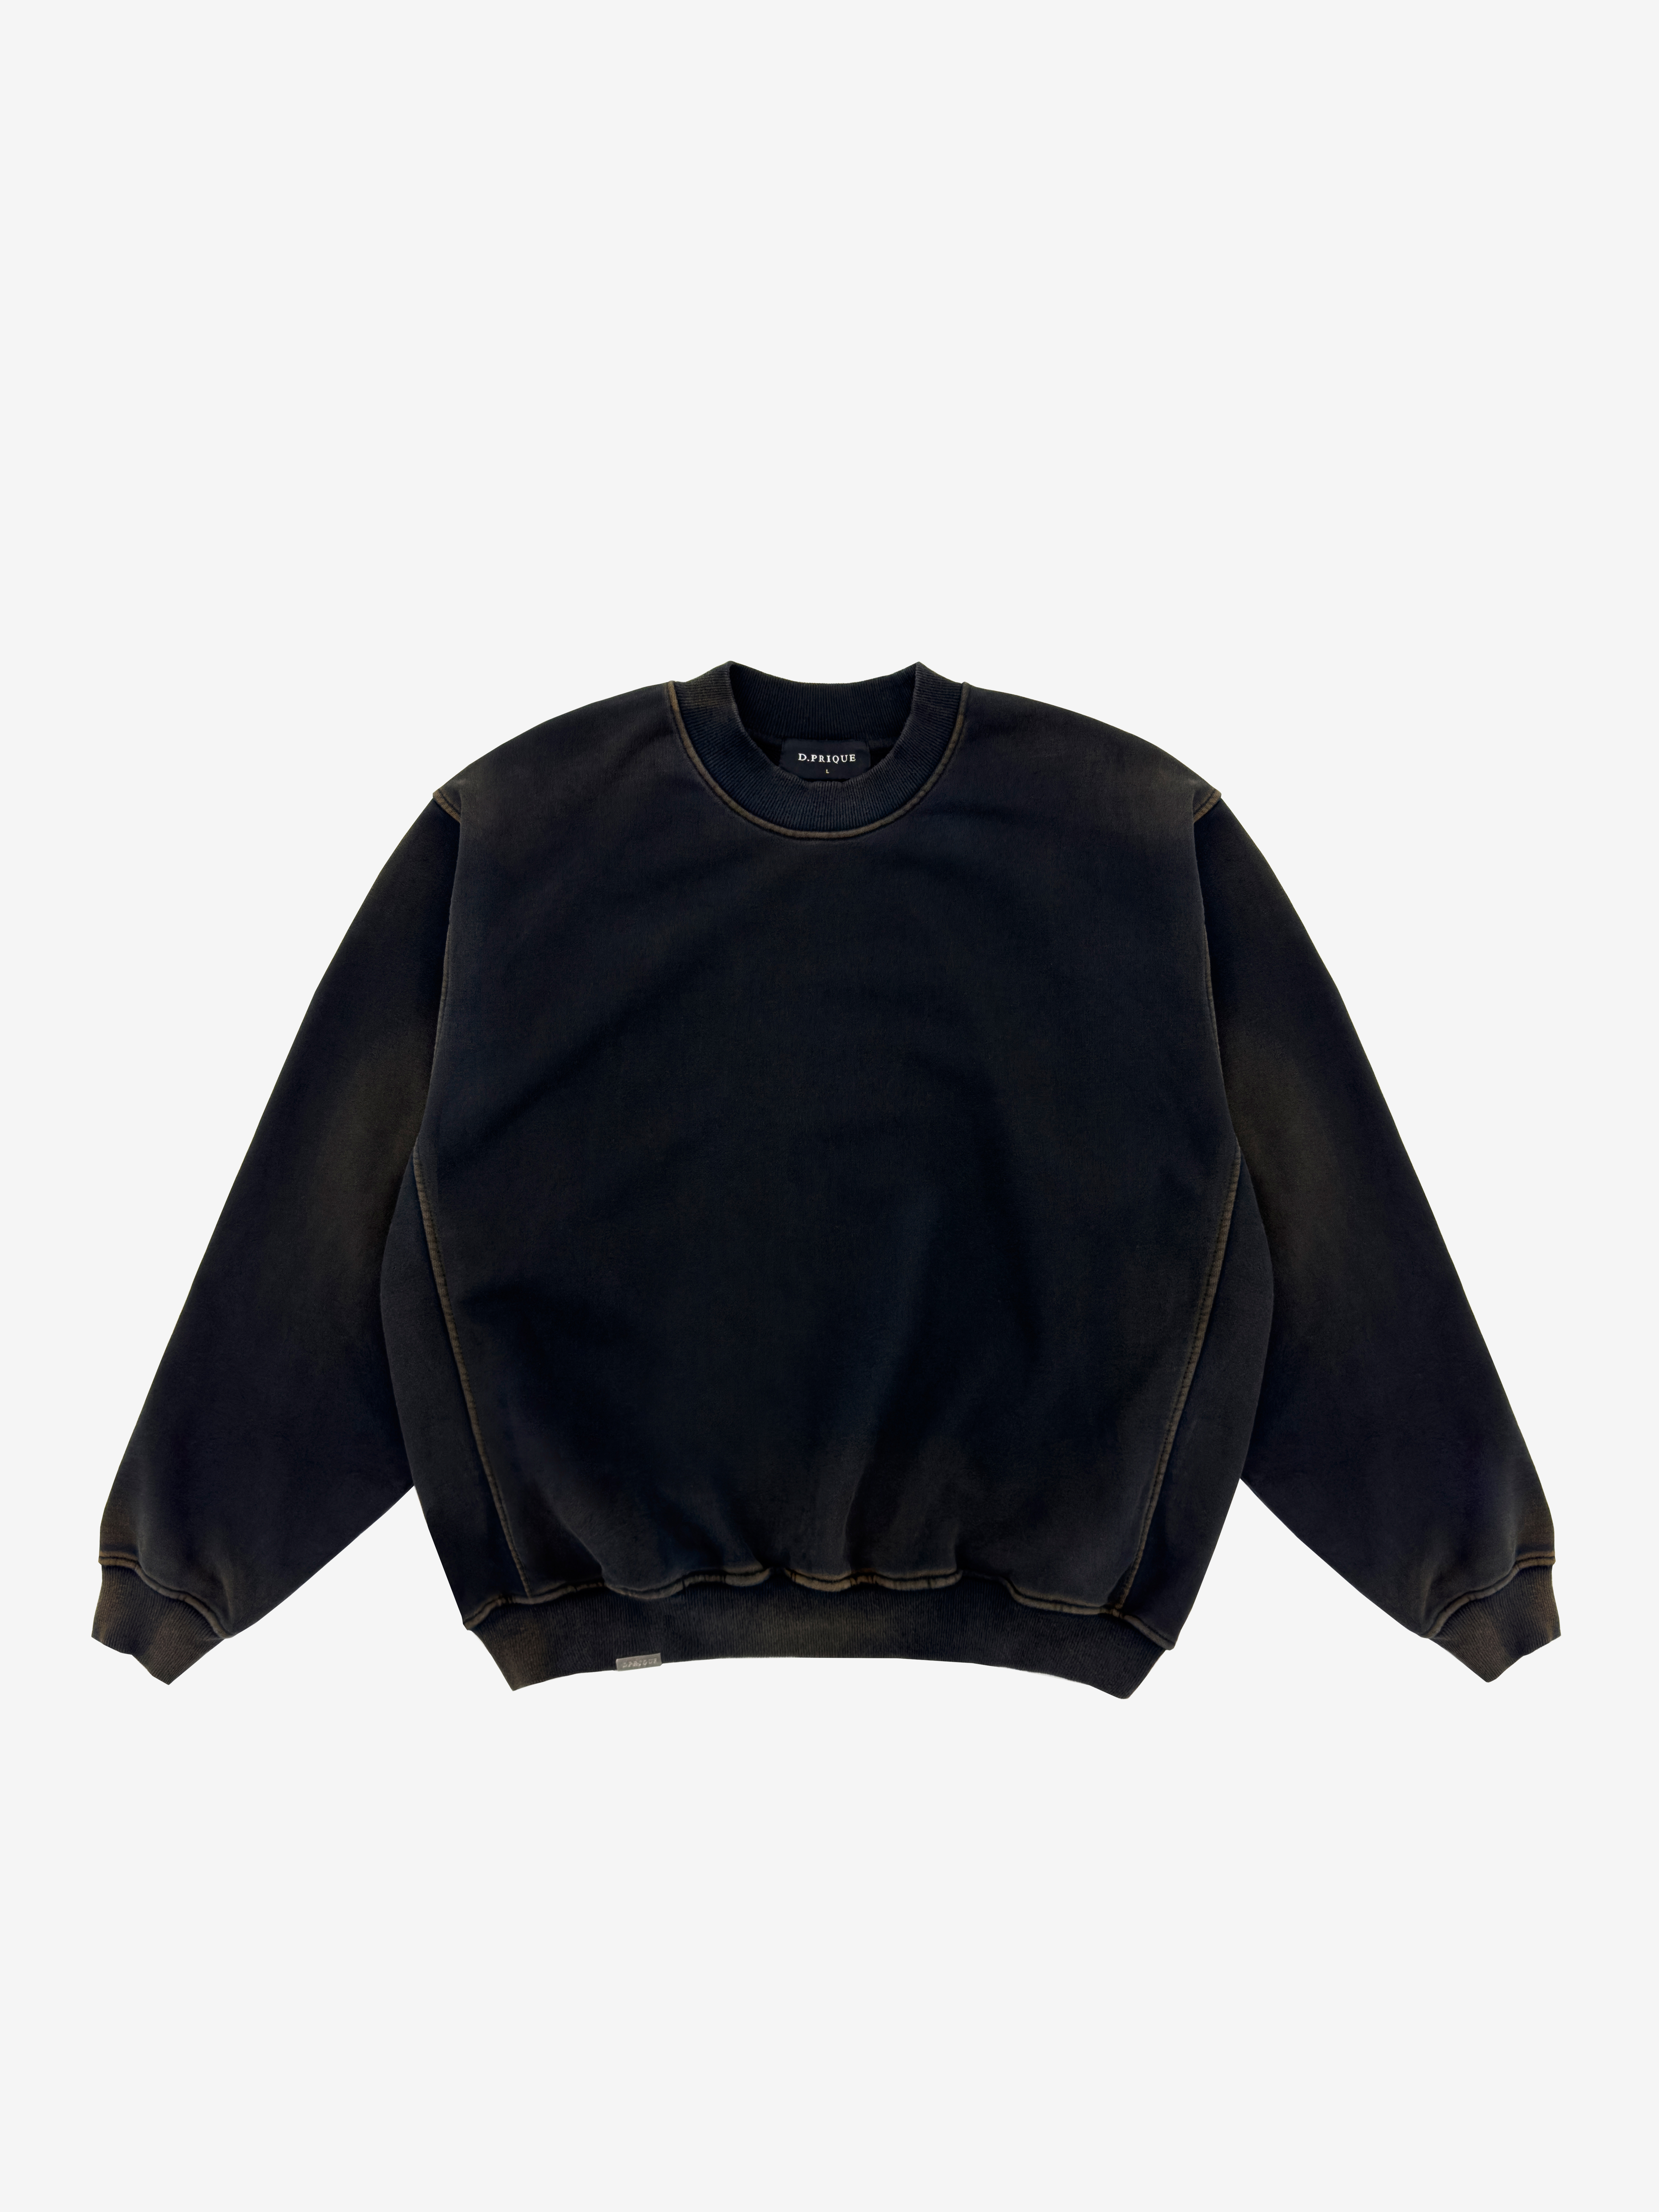 Over Sweatshirt - Faded Black